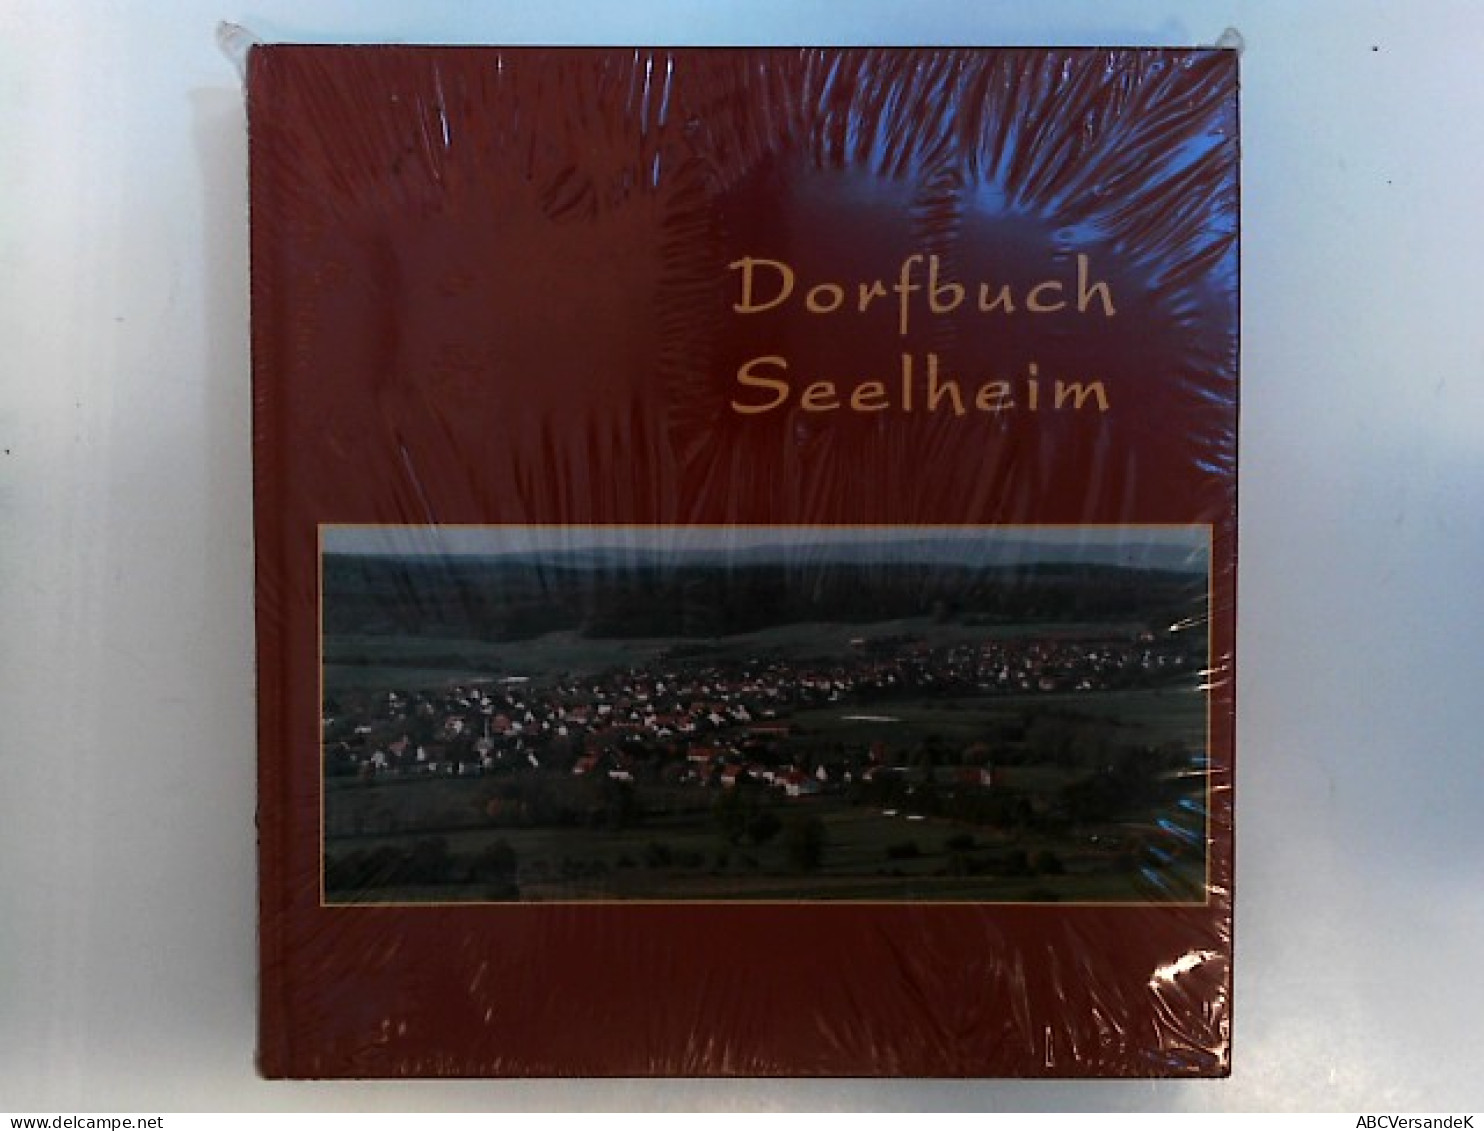 Dorfbuch Seelheim - Germania